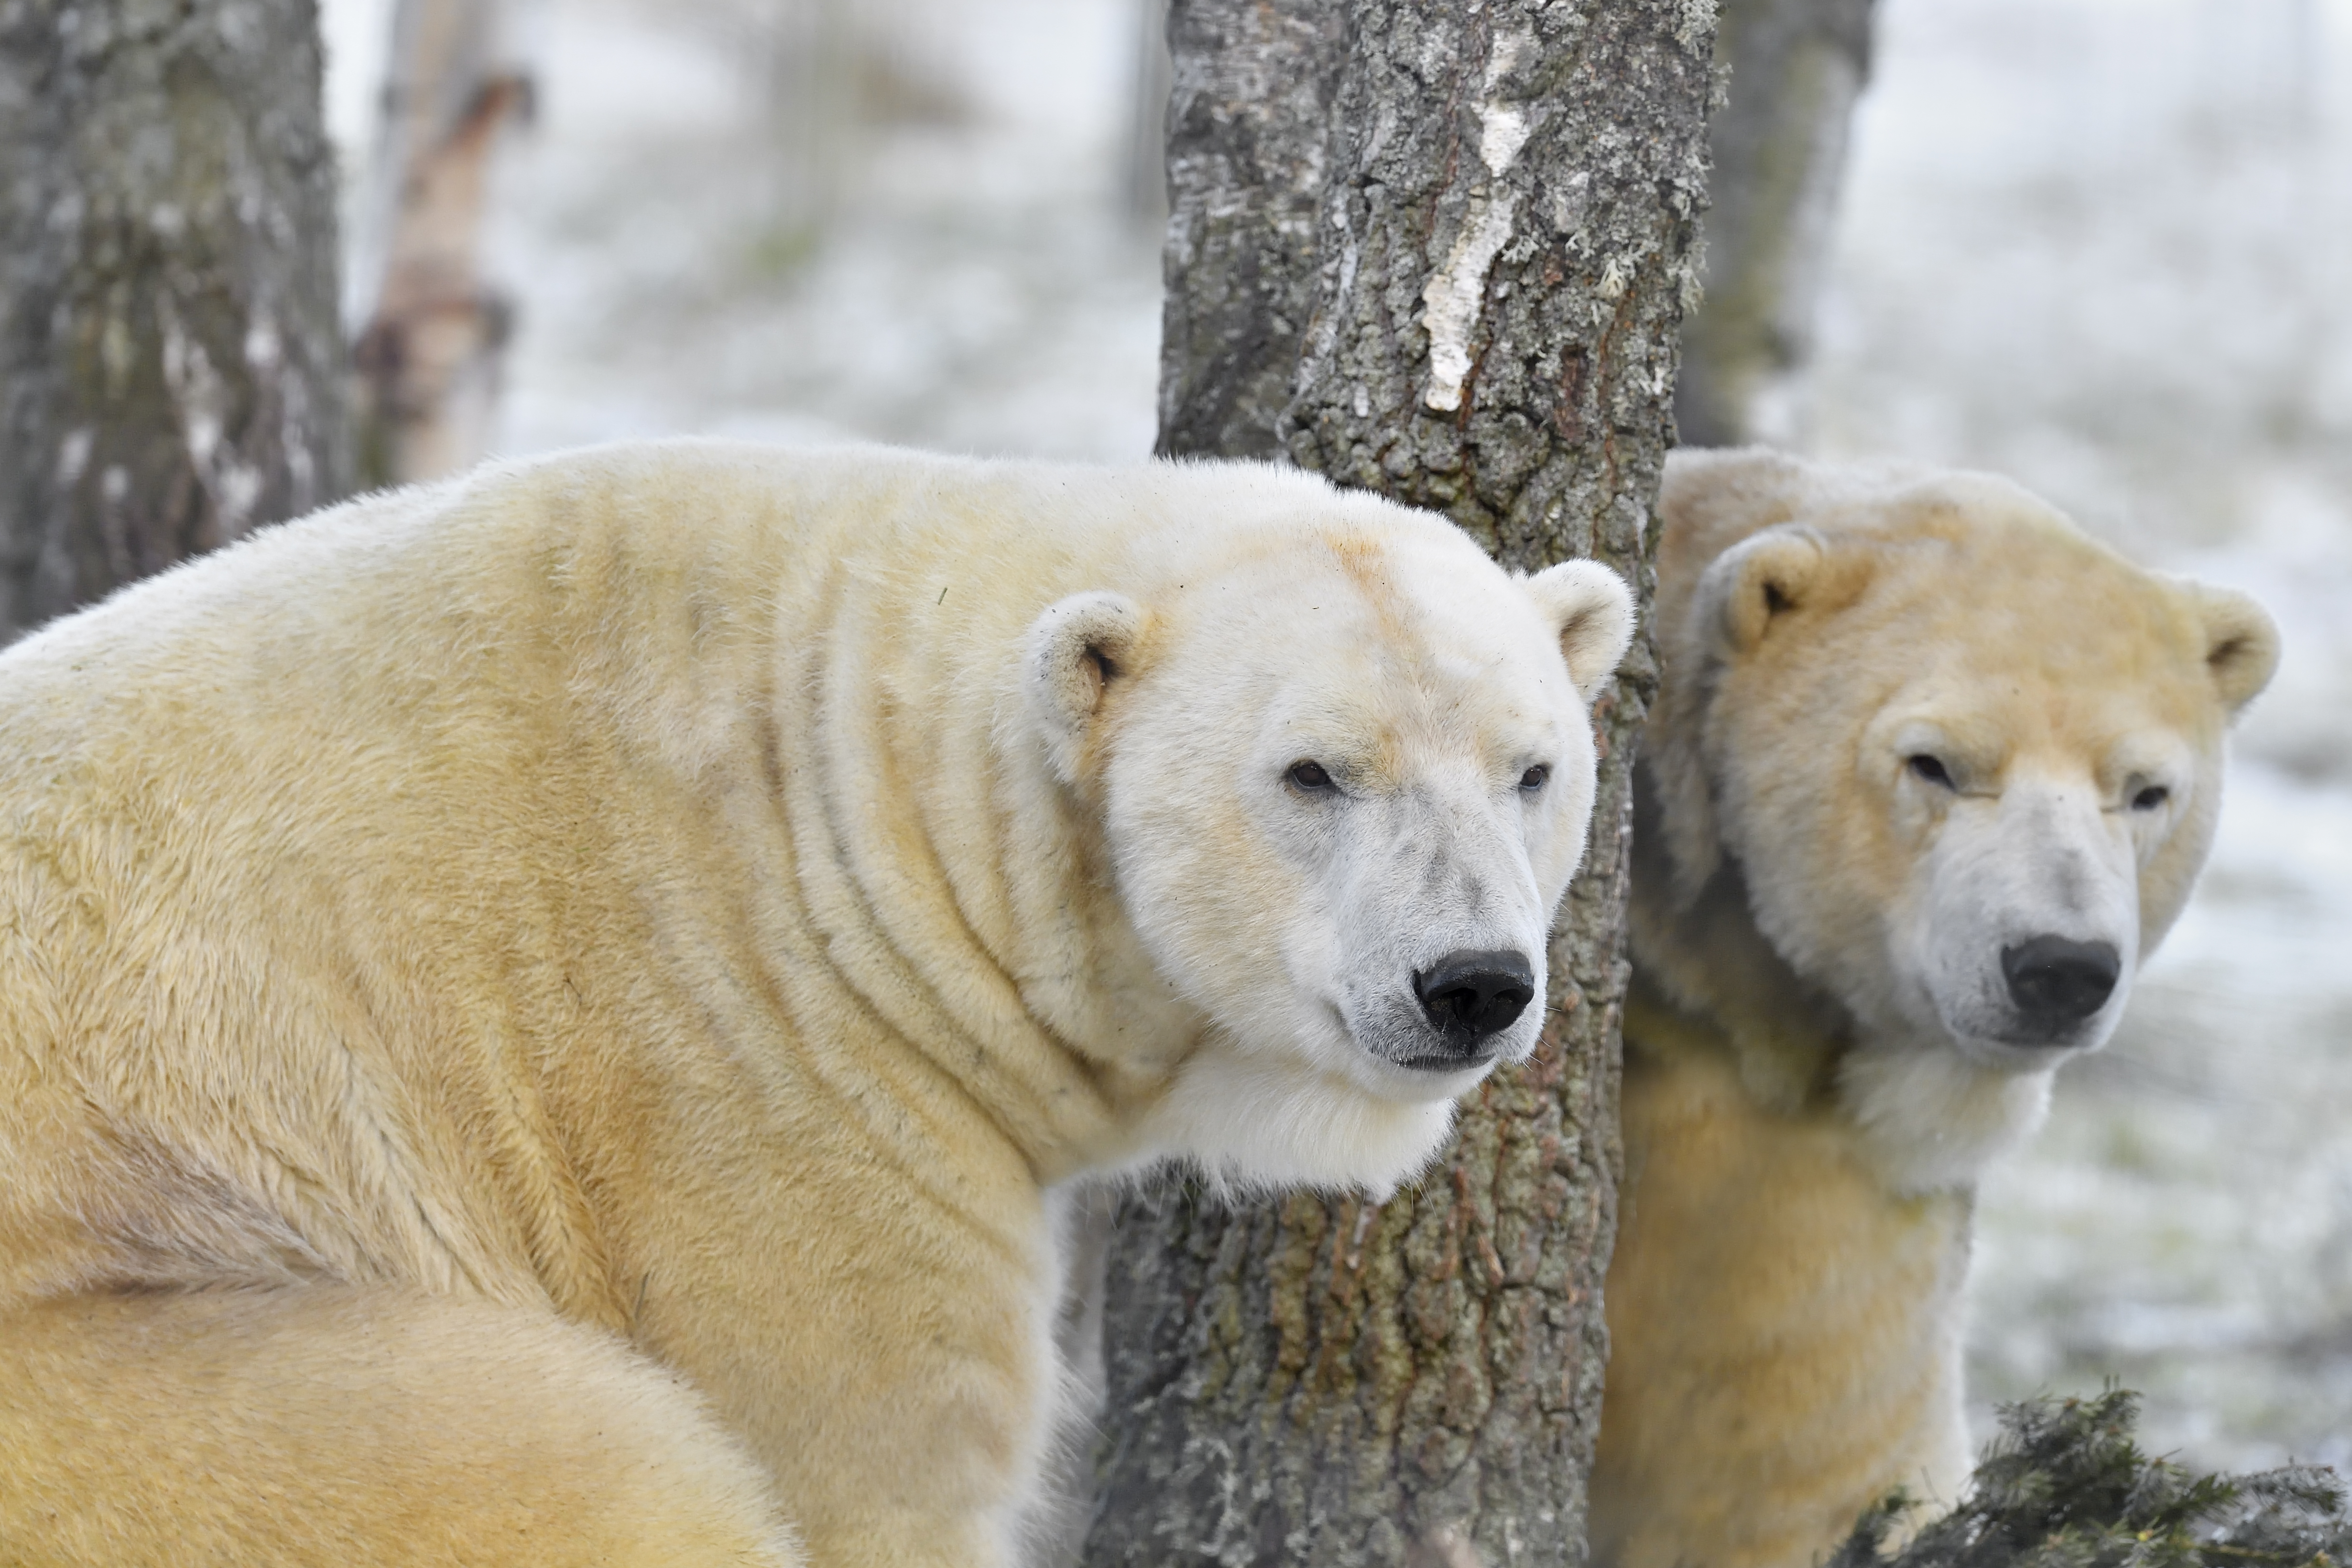 Polar bears Arktos and Walker stood by tree